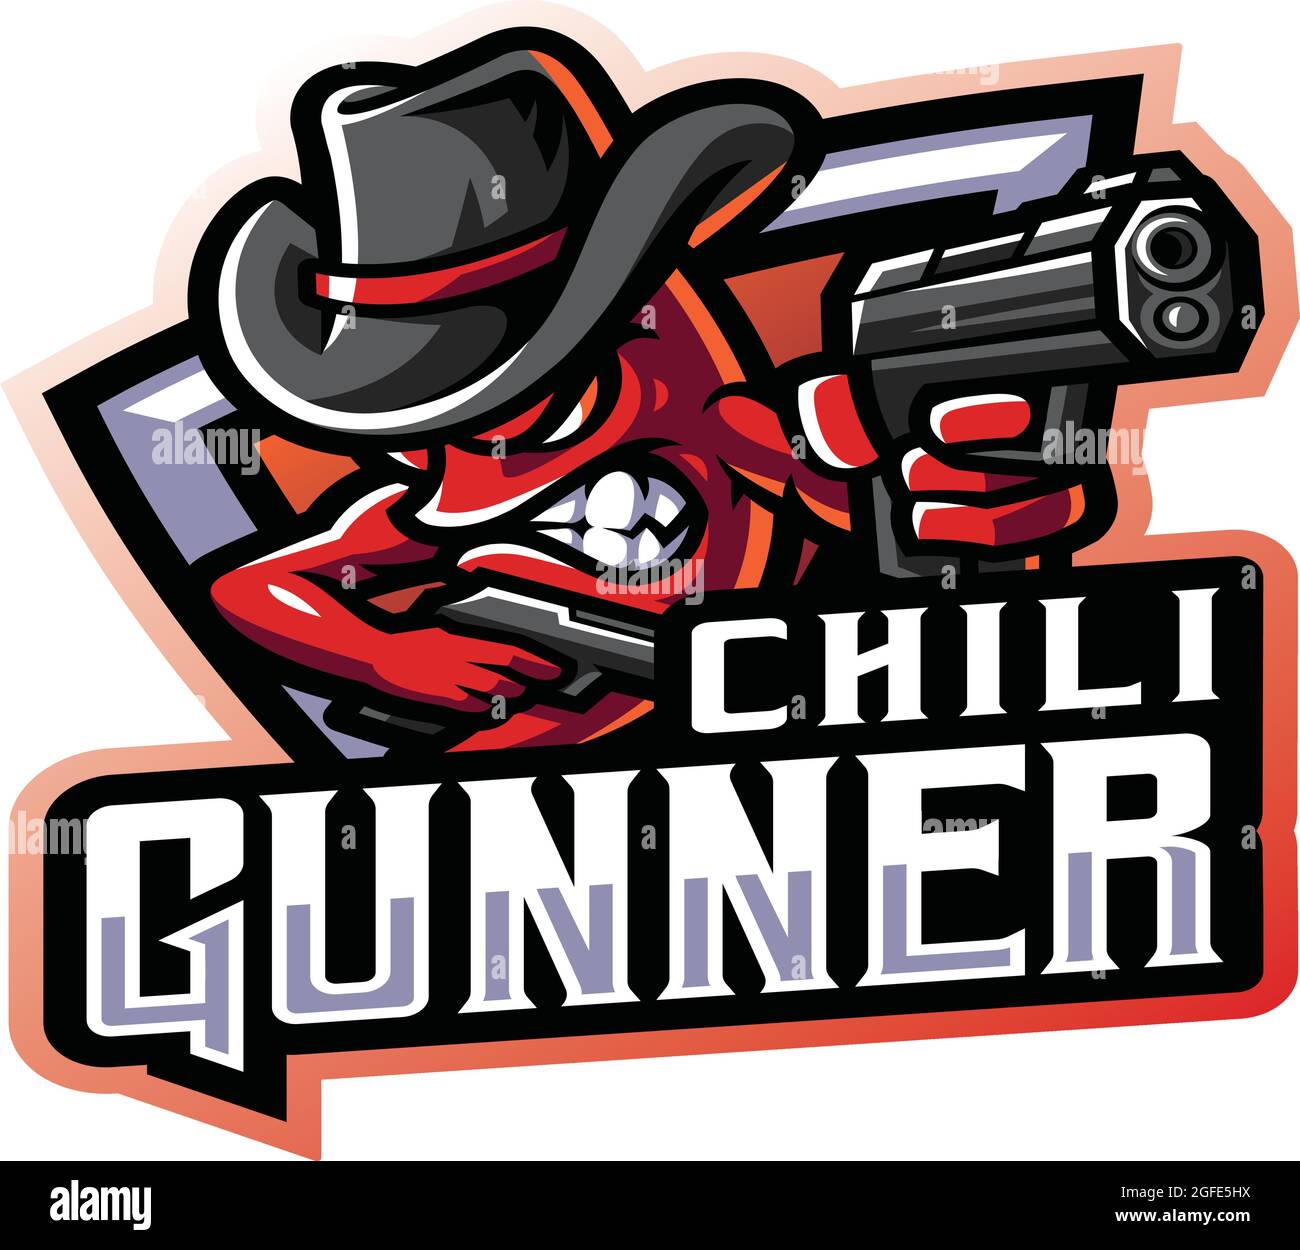 chili gunner esport new mascot logo vector Stock Vector